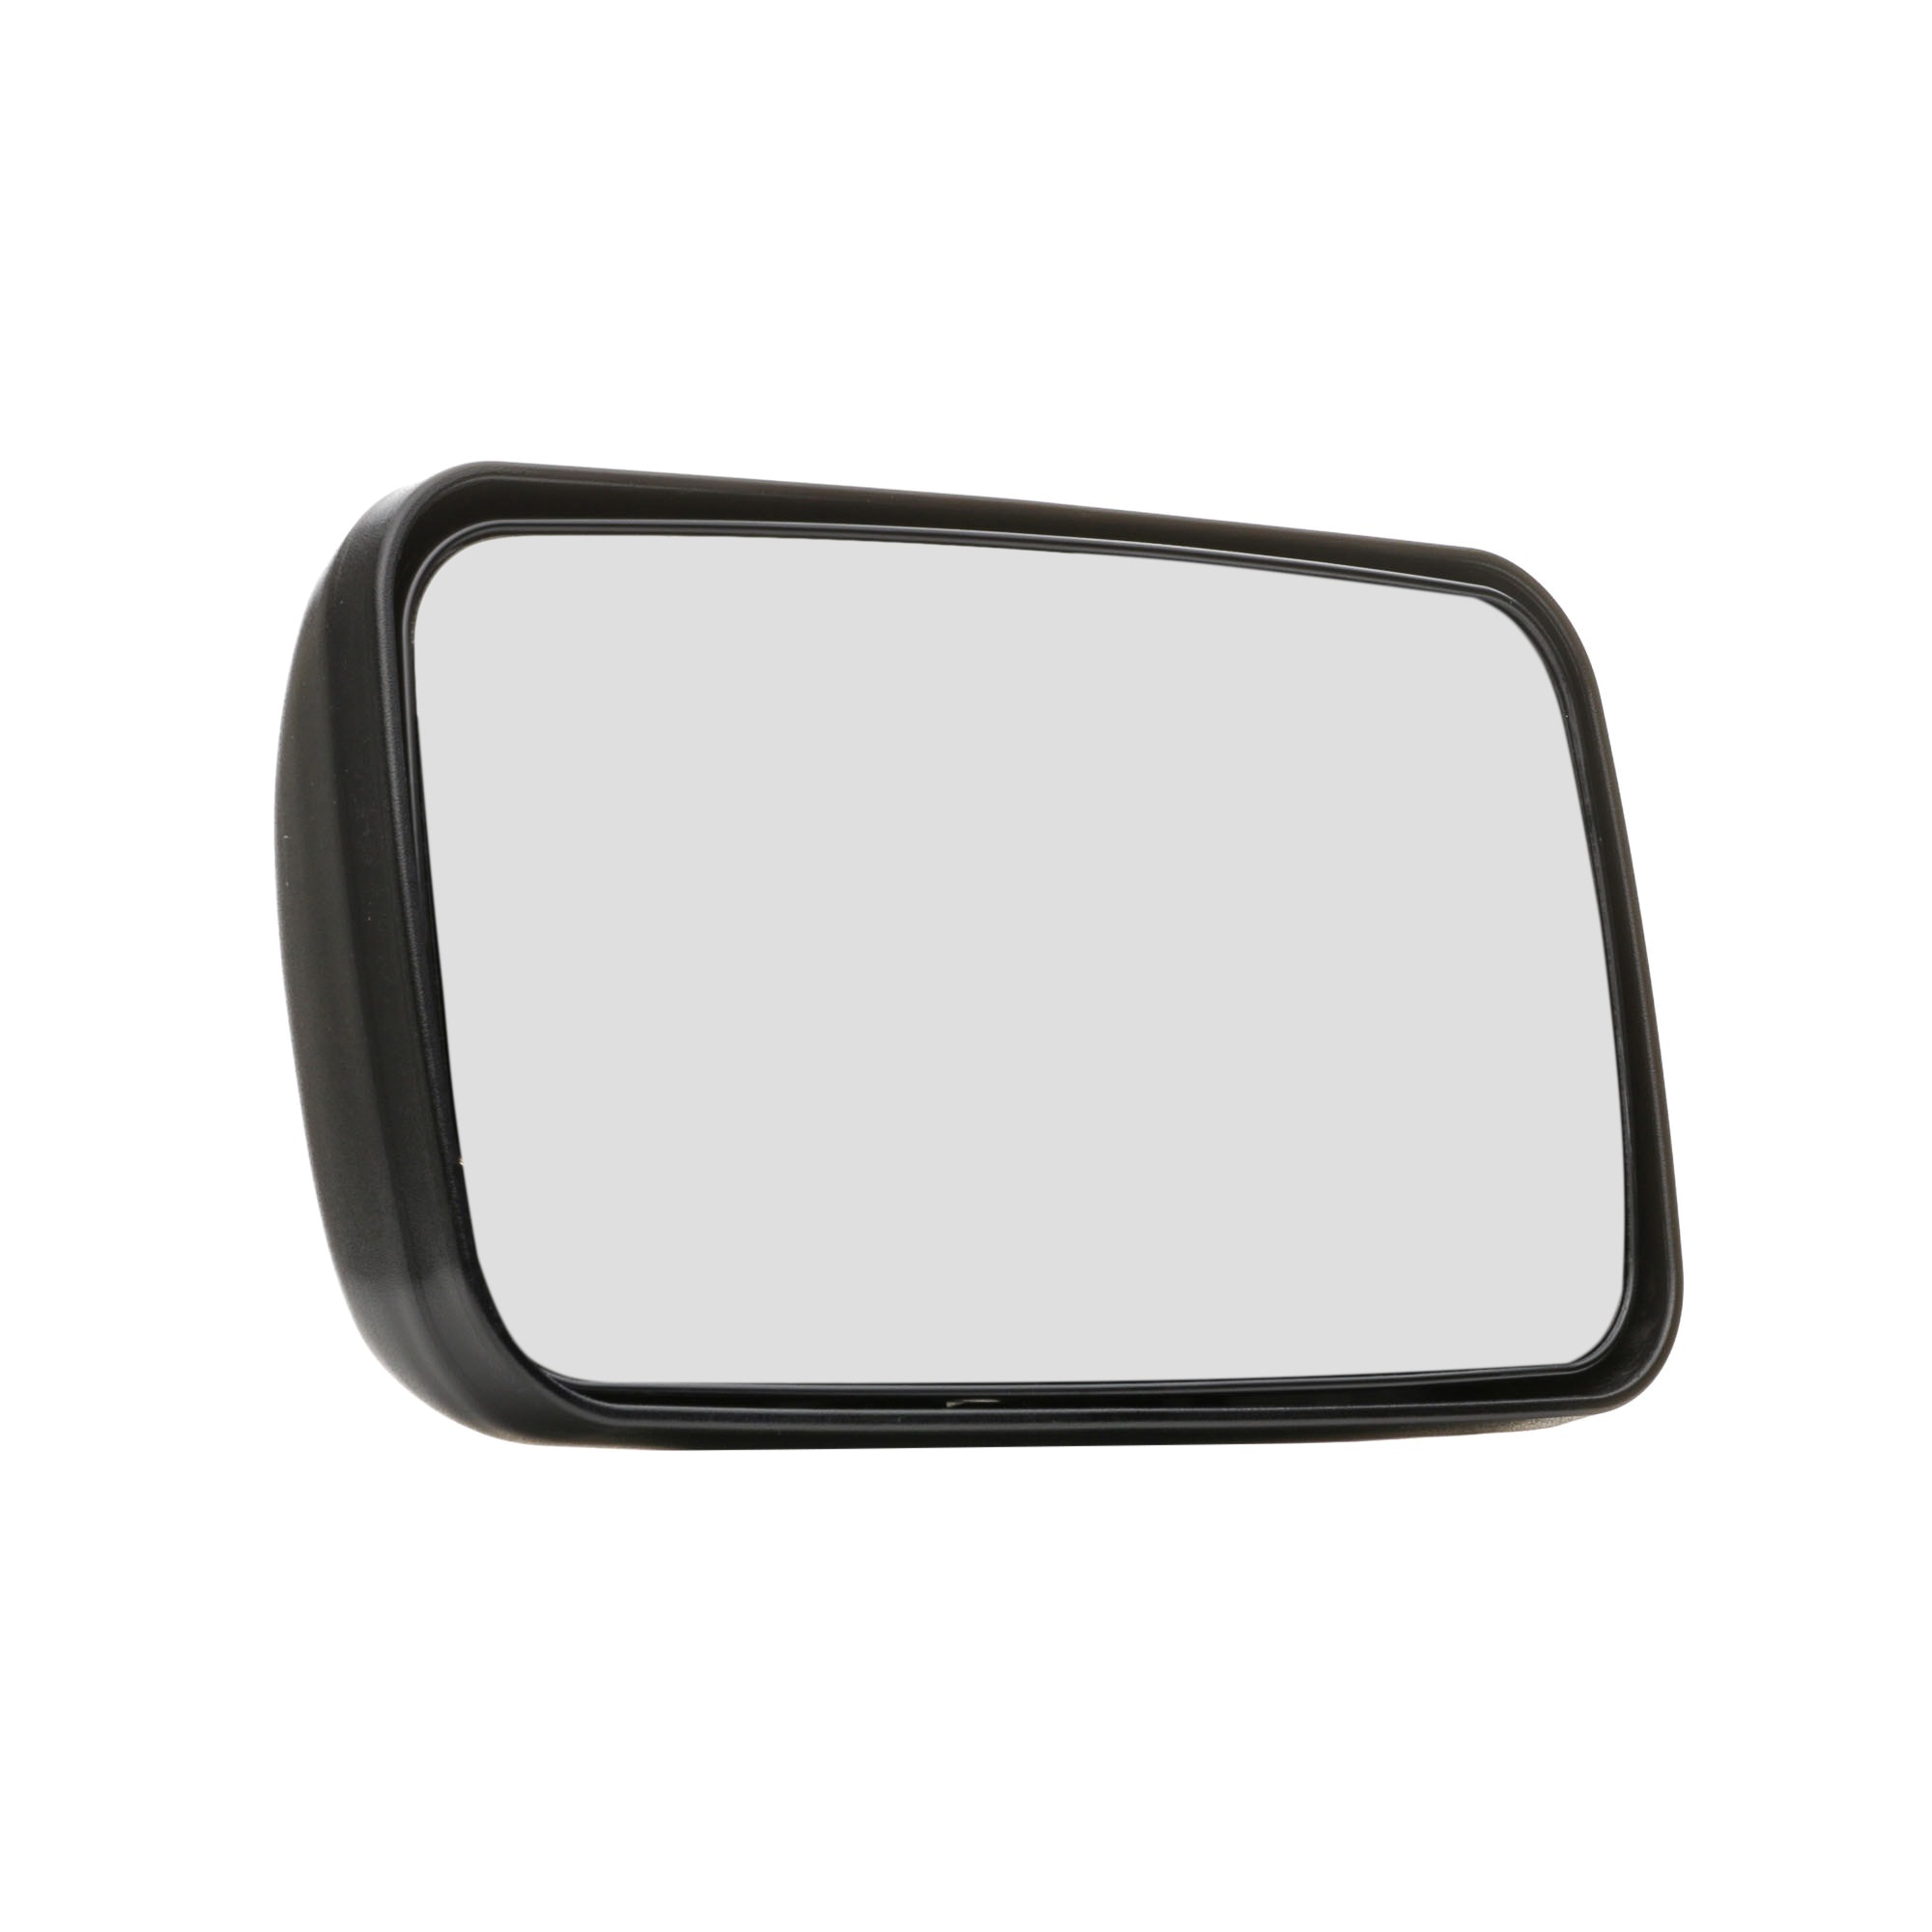 089109 RYWAL Left, Right, black, adjustable, Heatable, for manual mirror adjustment Side mirror LS0018E24VR buy